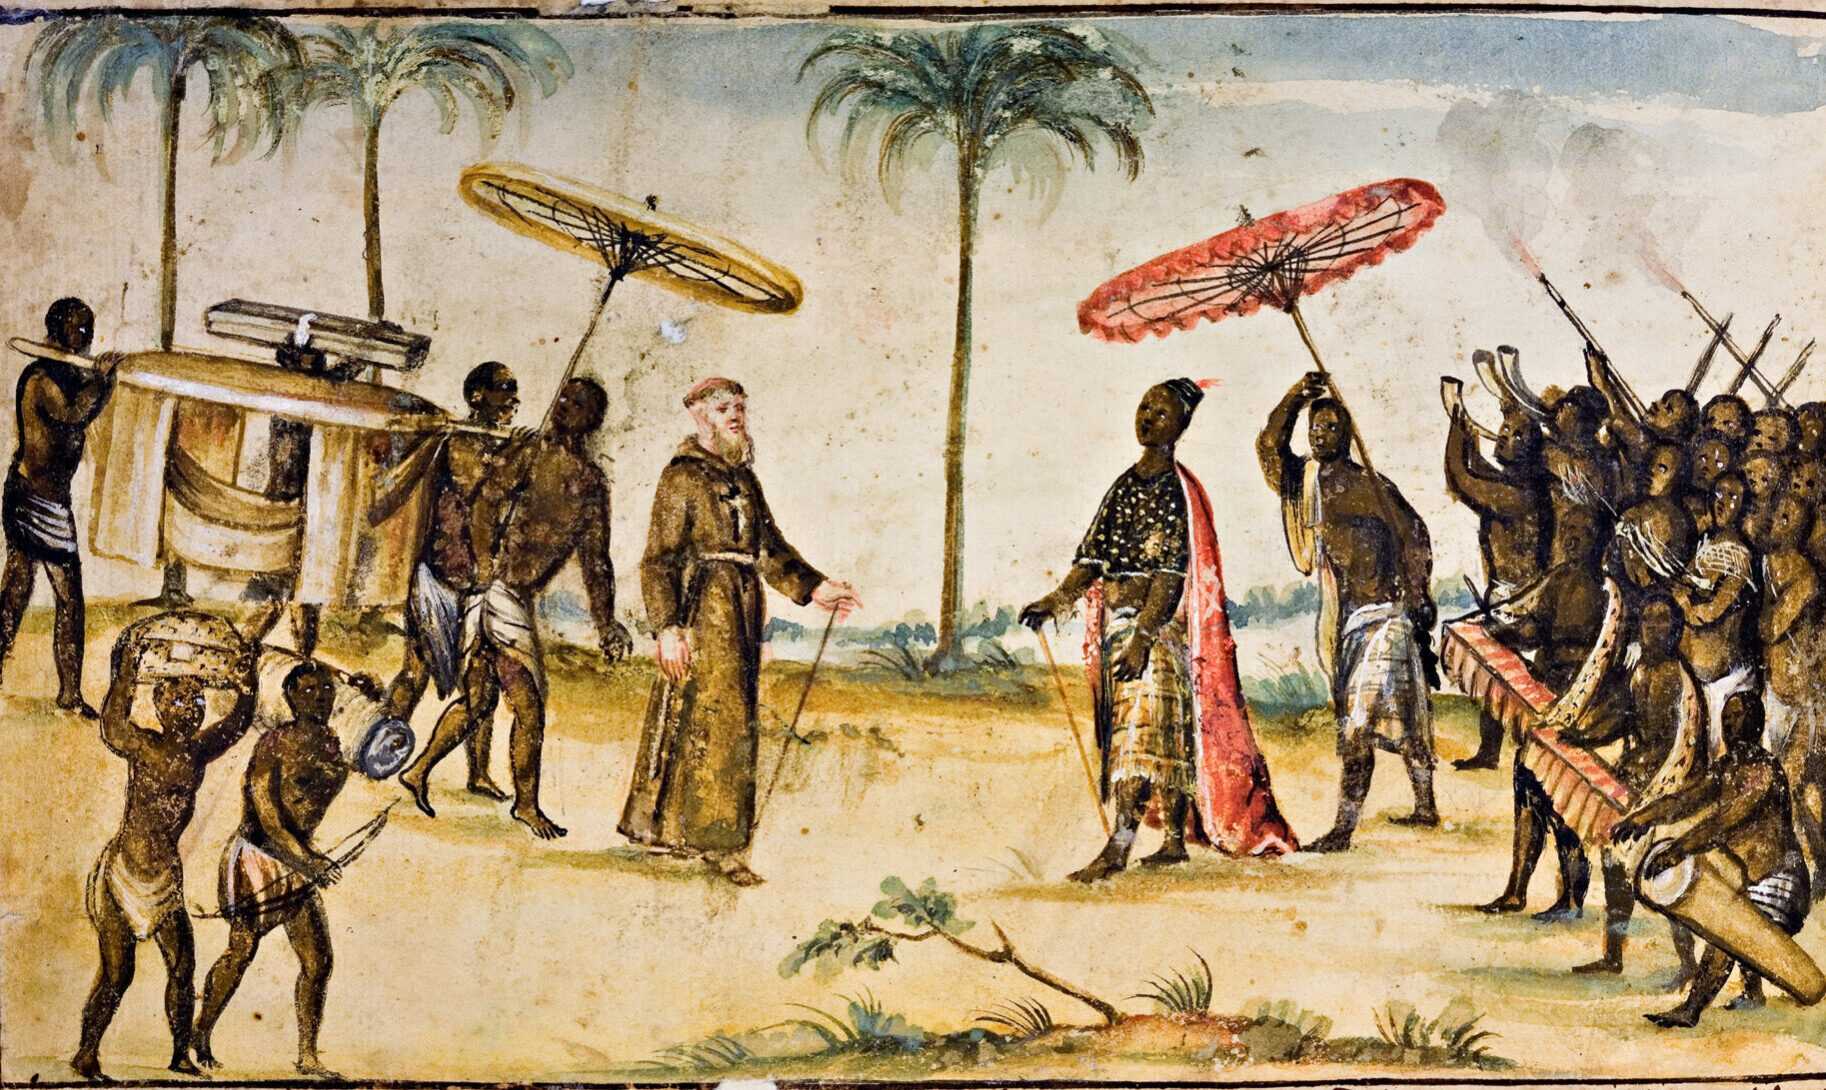 Illustration of European arrival in Africa